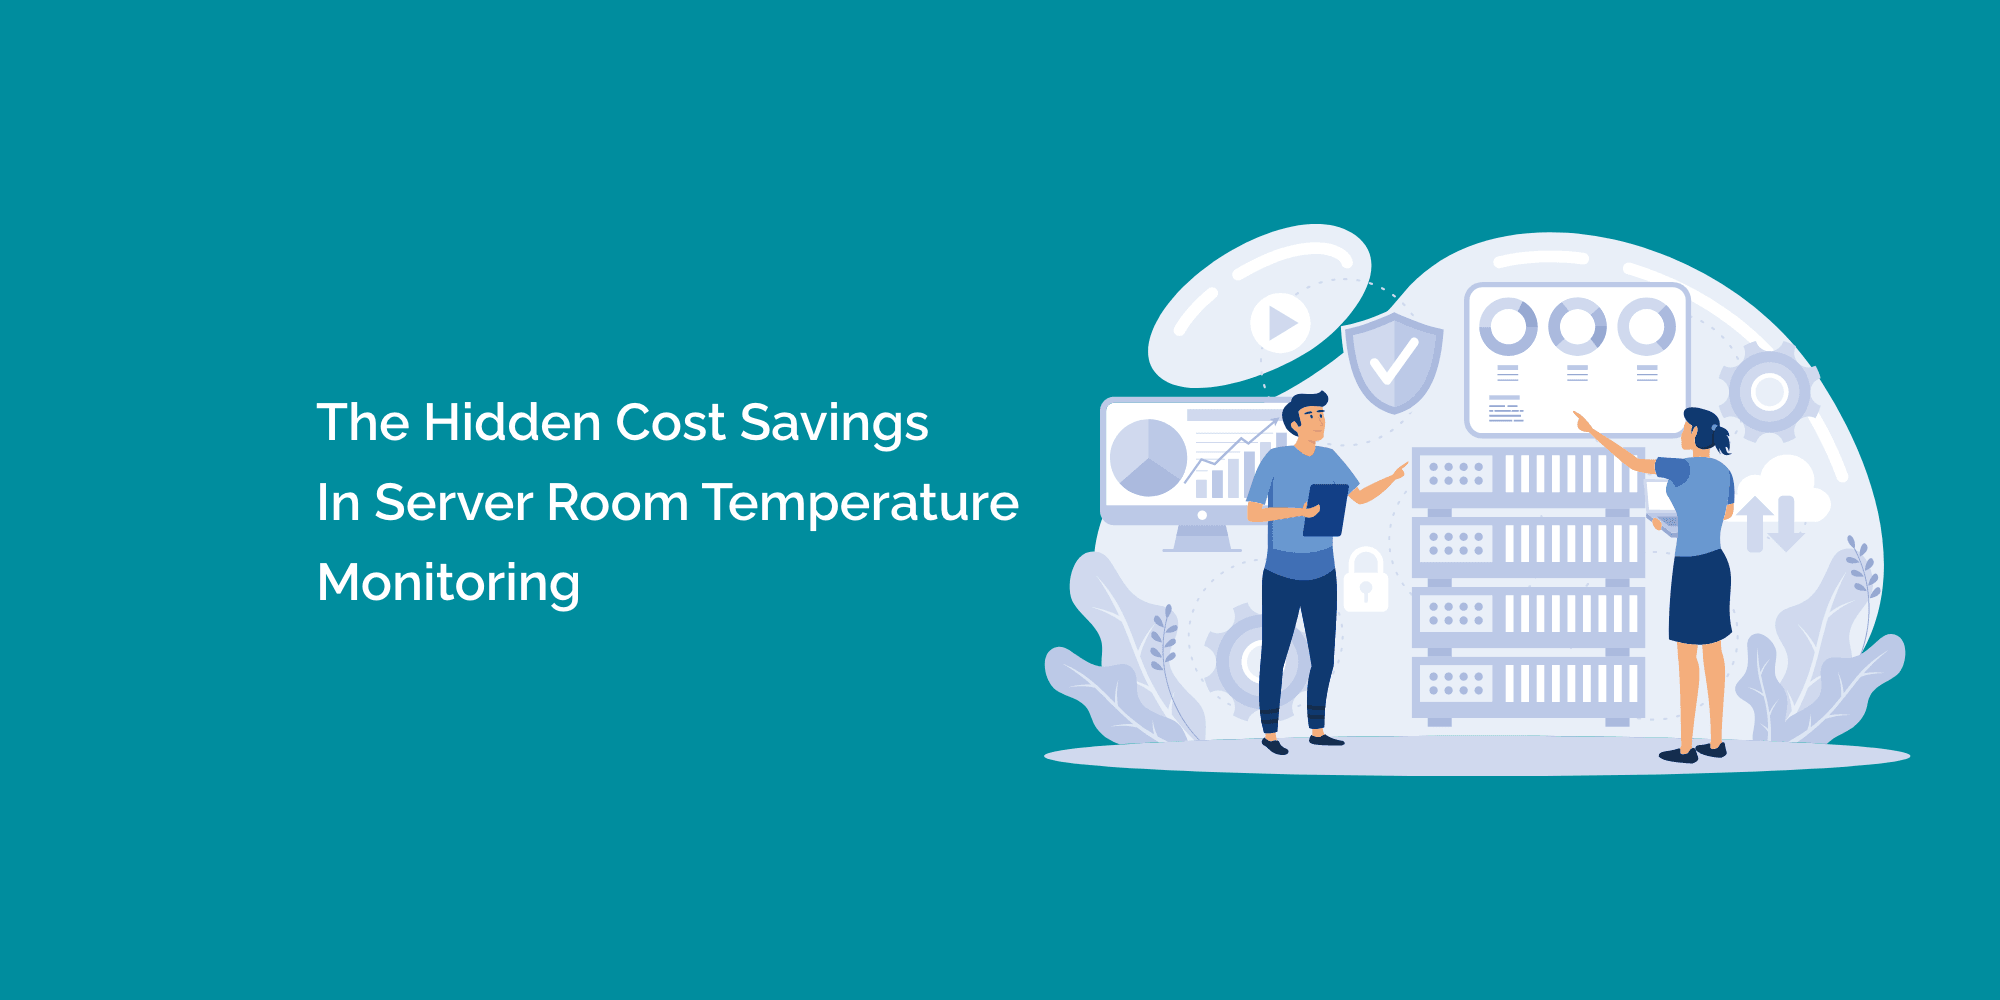 The Hidden Cost Savings in Server Room Temperature Monitoring